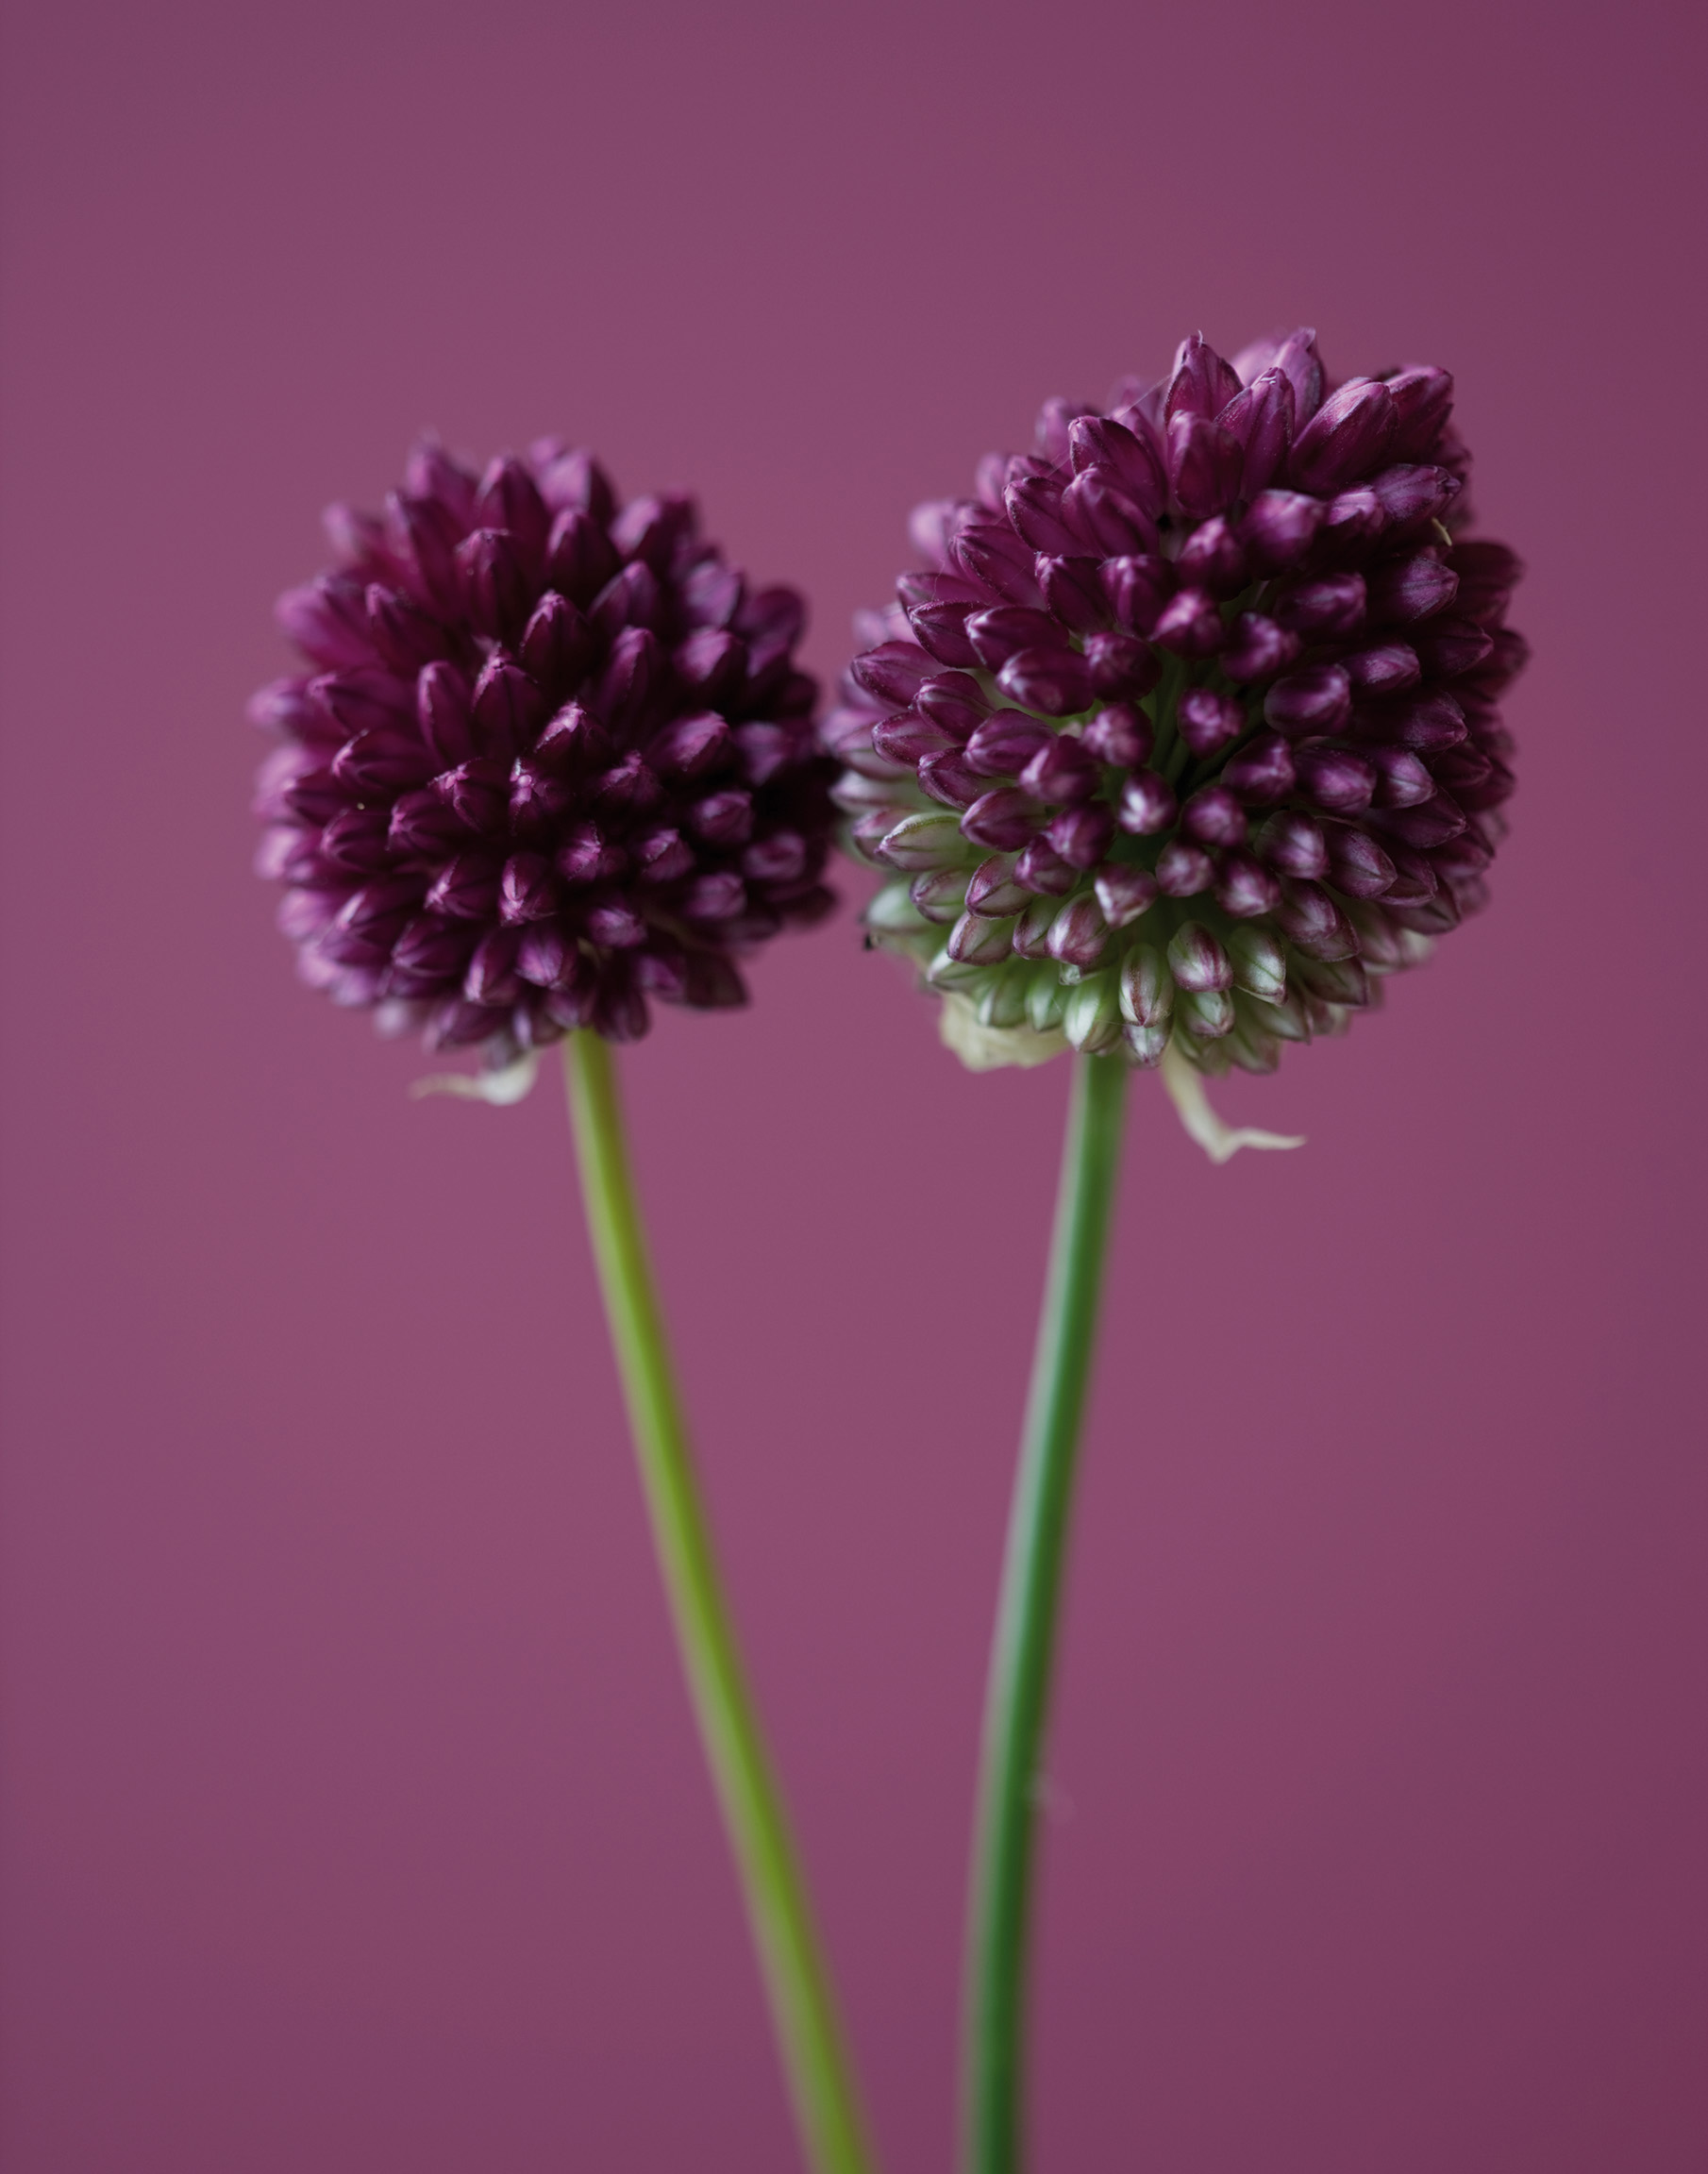 The Purple Flowers of Allium Sphaerocephalon